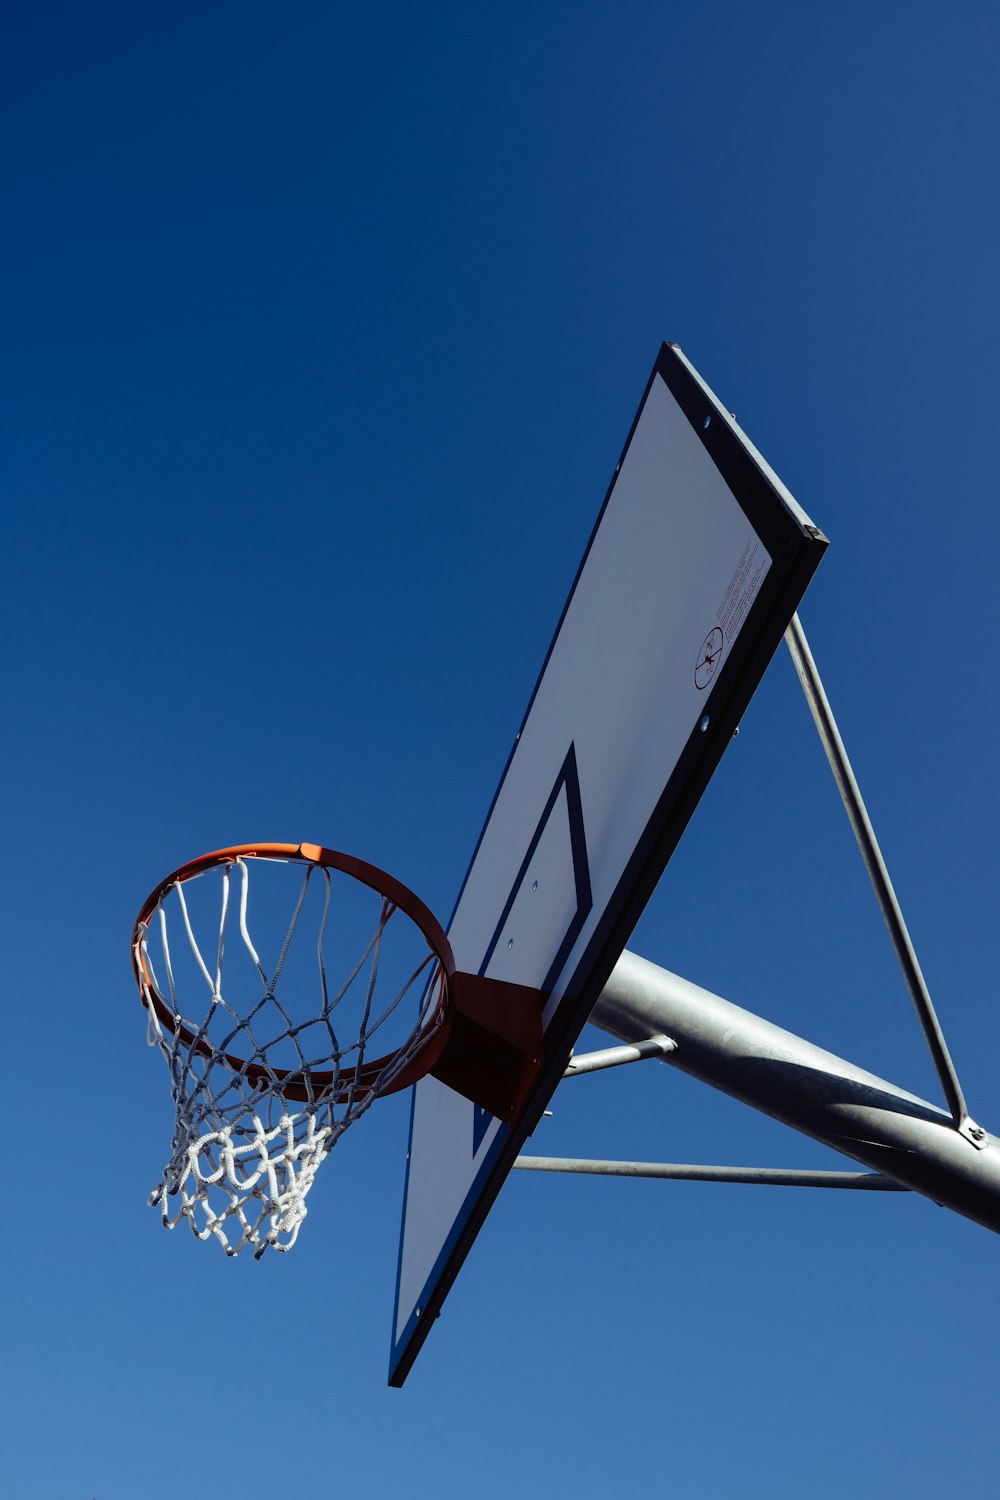 white and black basketball hoop under blue sky during daytime